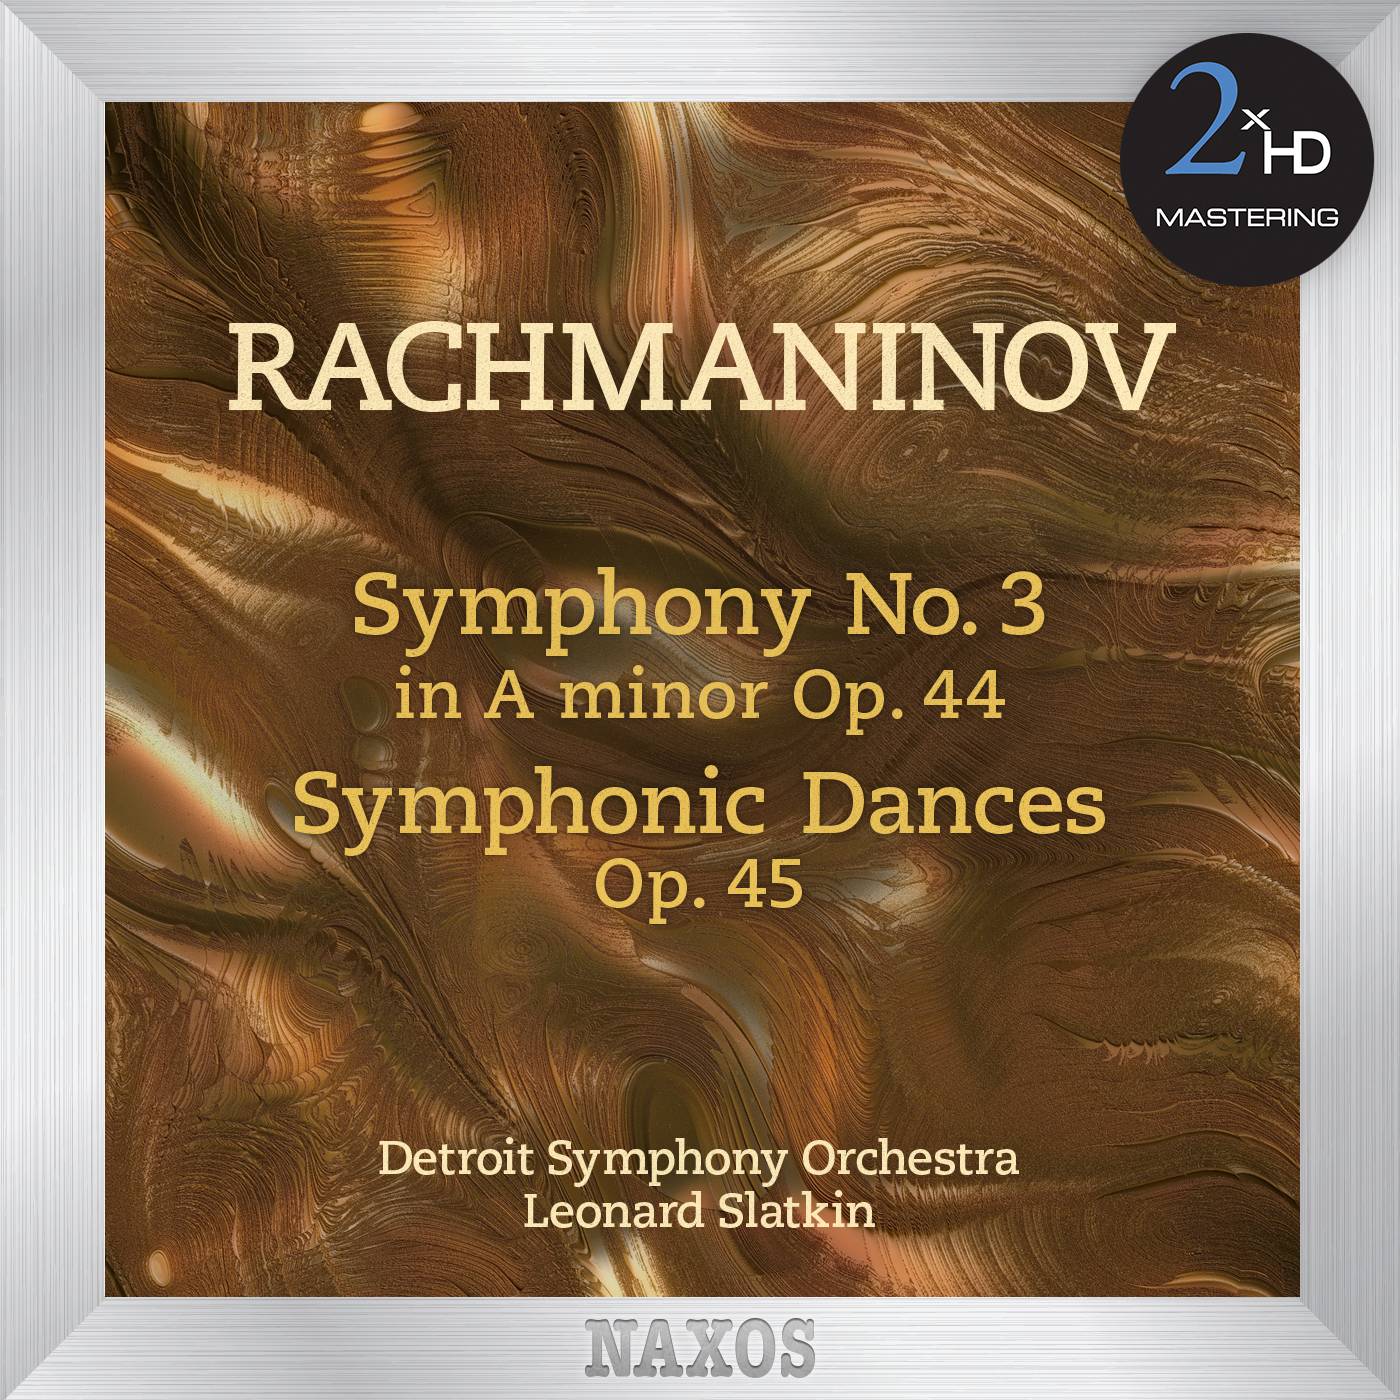 Detroit Symphony Orchestra, Leonard Slatkin – Rachmaninov: Symphony No. 3 in A minor Op. 44 – Symphonic Dances Op. 45 (2013/2015) [Official Digital Download 24bit/192kHz]